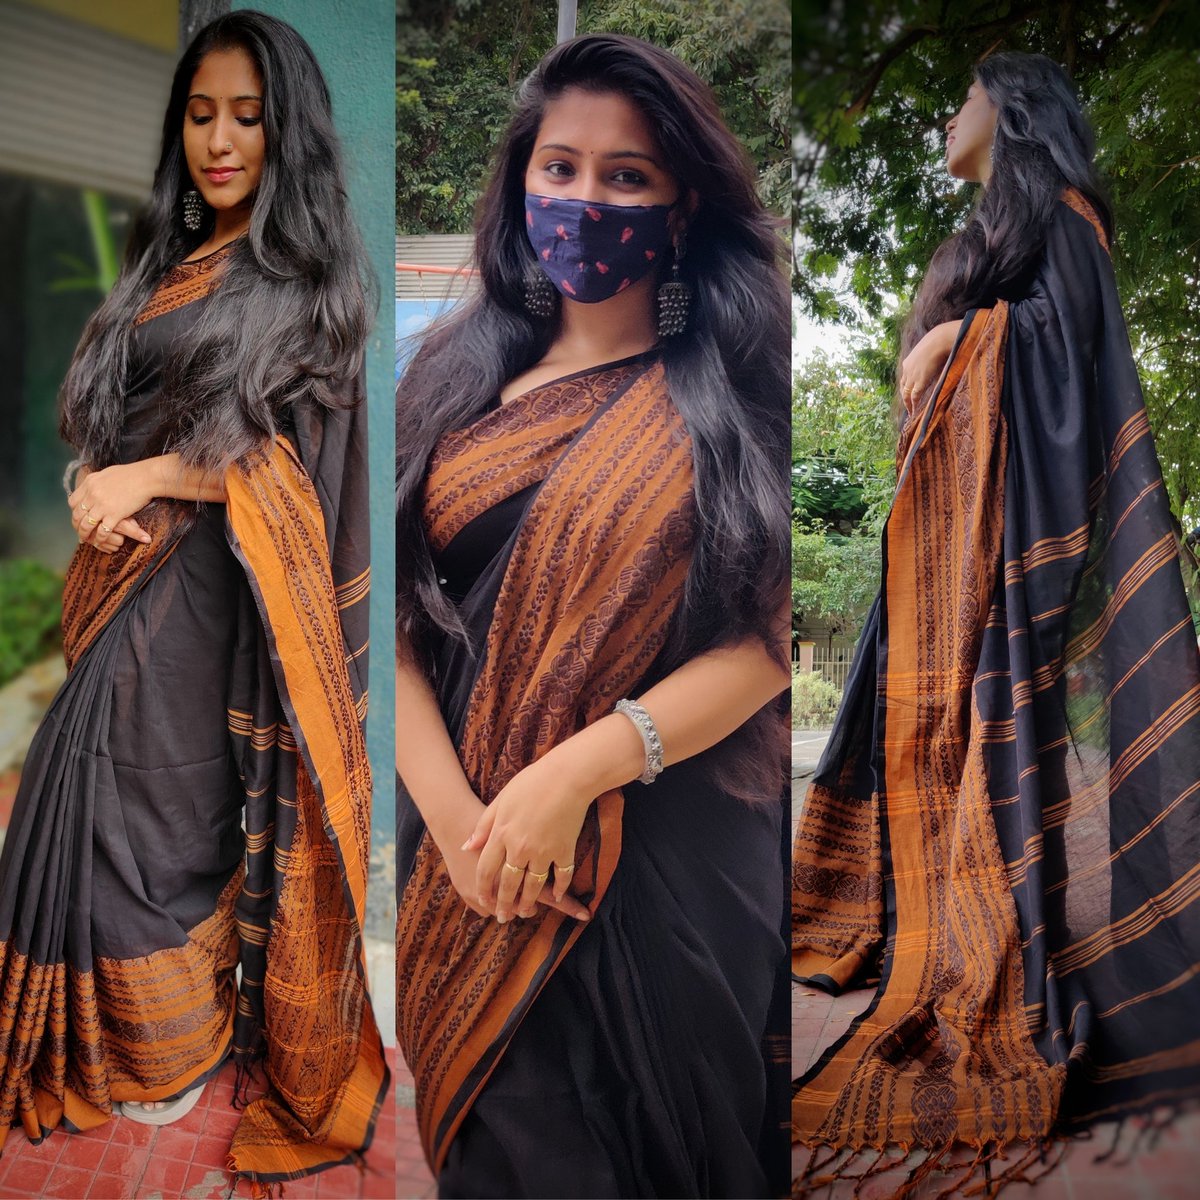 Pretty Handwoven khadi cotton saree #VocalForLocal #vocal4handmade #handloom #SareeTwitter #khadicottonsaree #textilesofindia #weavesofindia #SupportSmallBusinesses #supportlooms